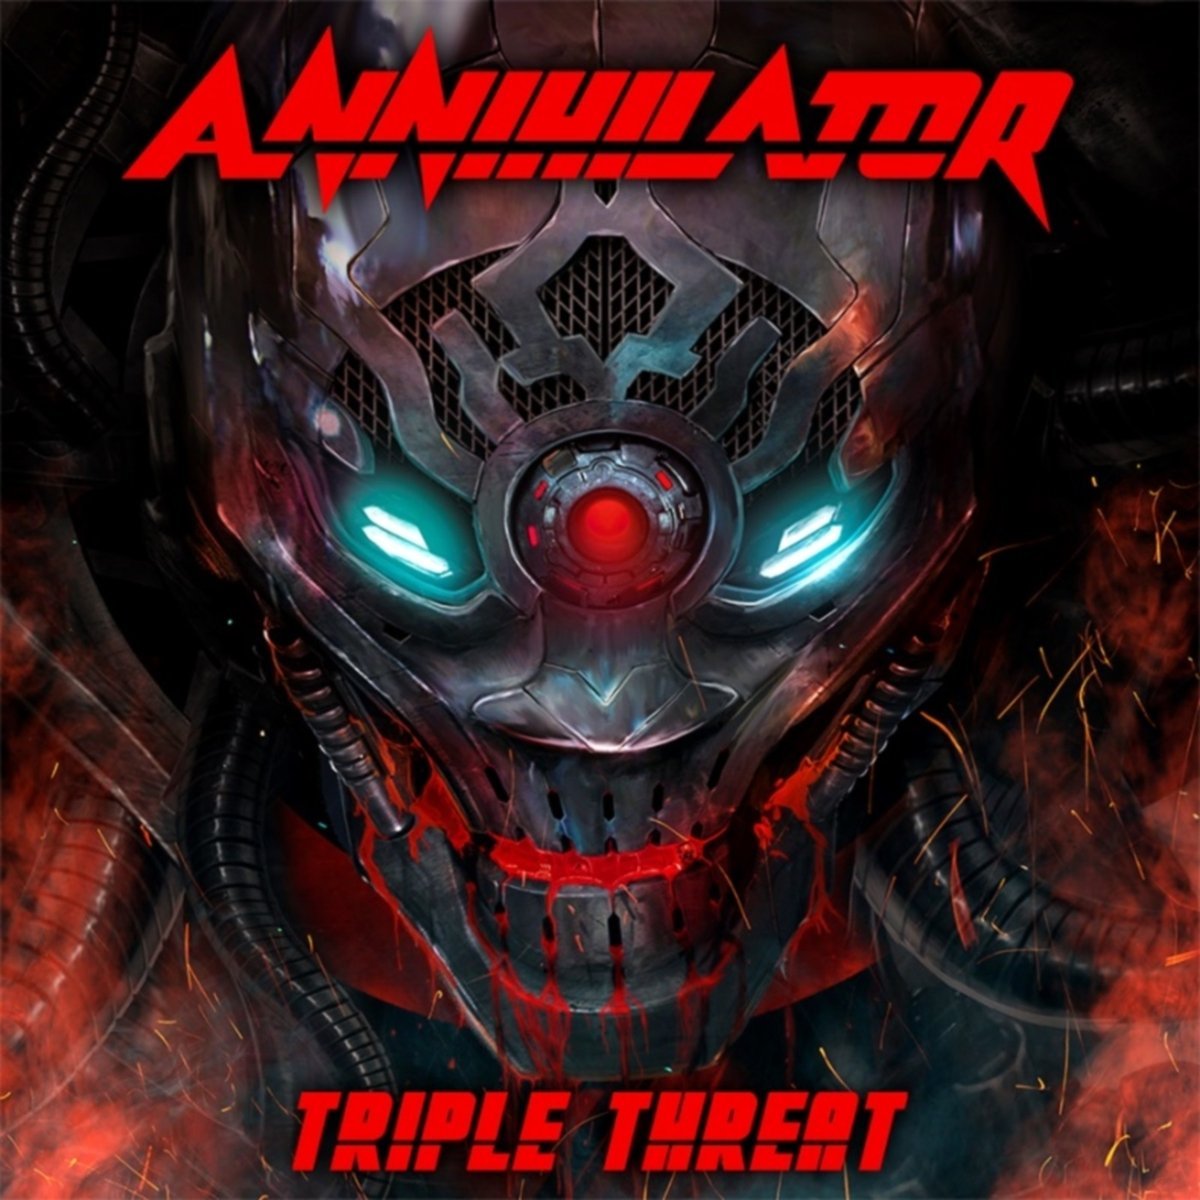 Annihilator "Triple Threat" 2 CD/DVD